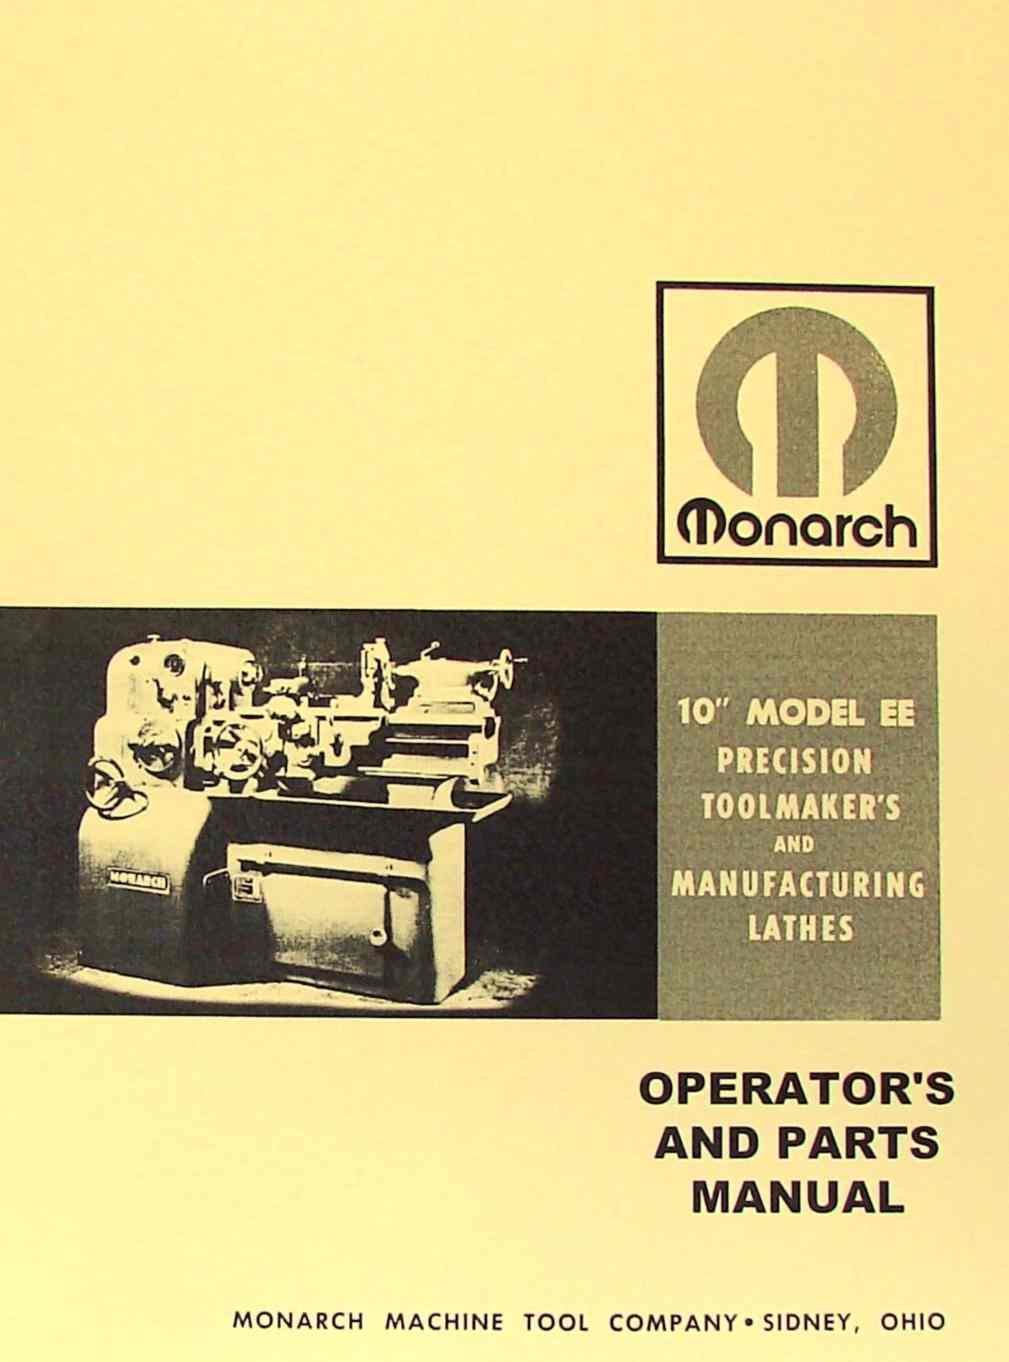 Monarch 10" Model EE Toolmaker's Lathe 1940's-1950's Operator & Parts Manual #91 